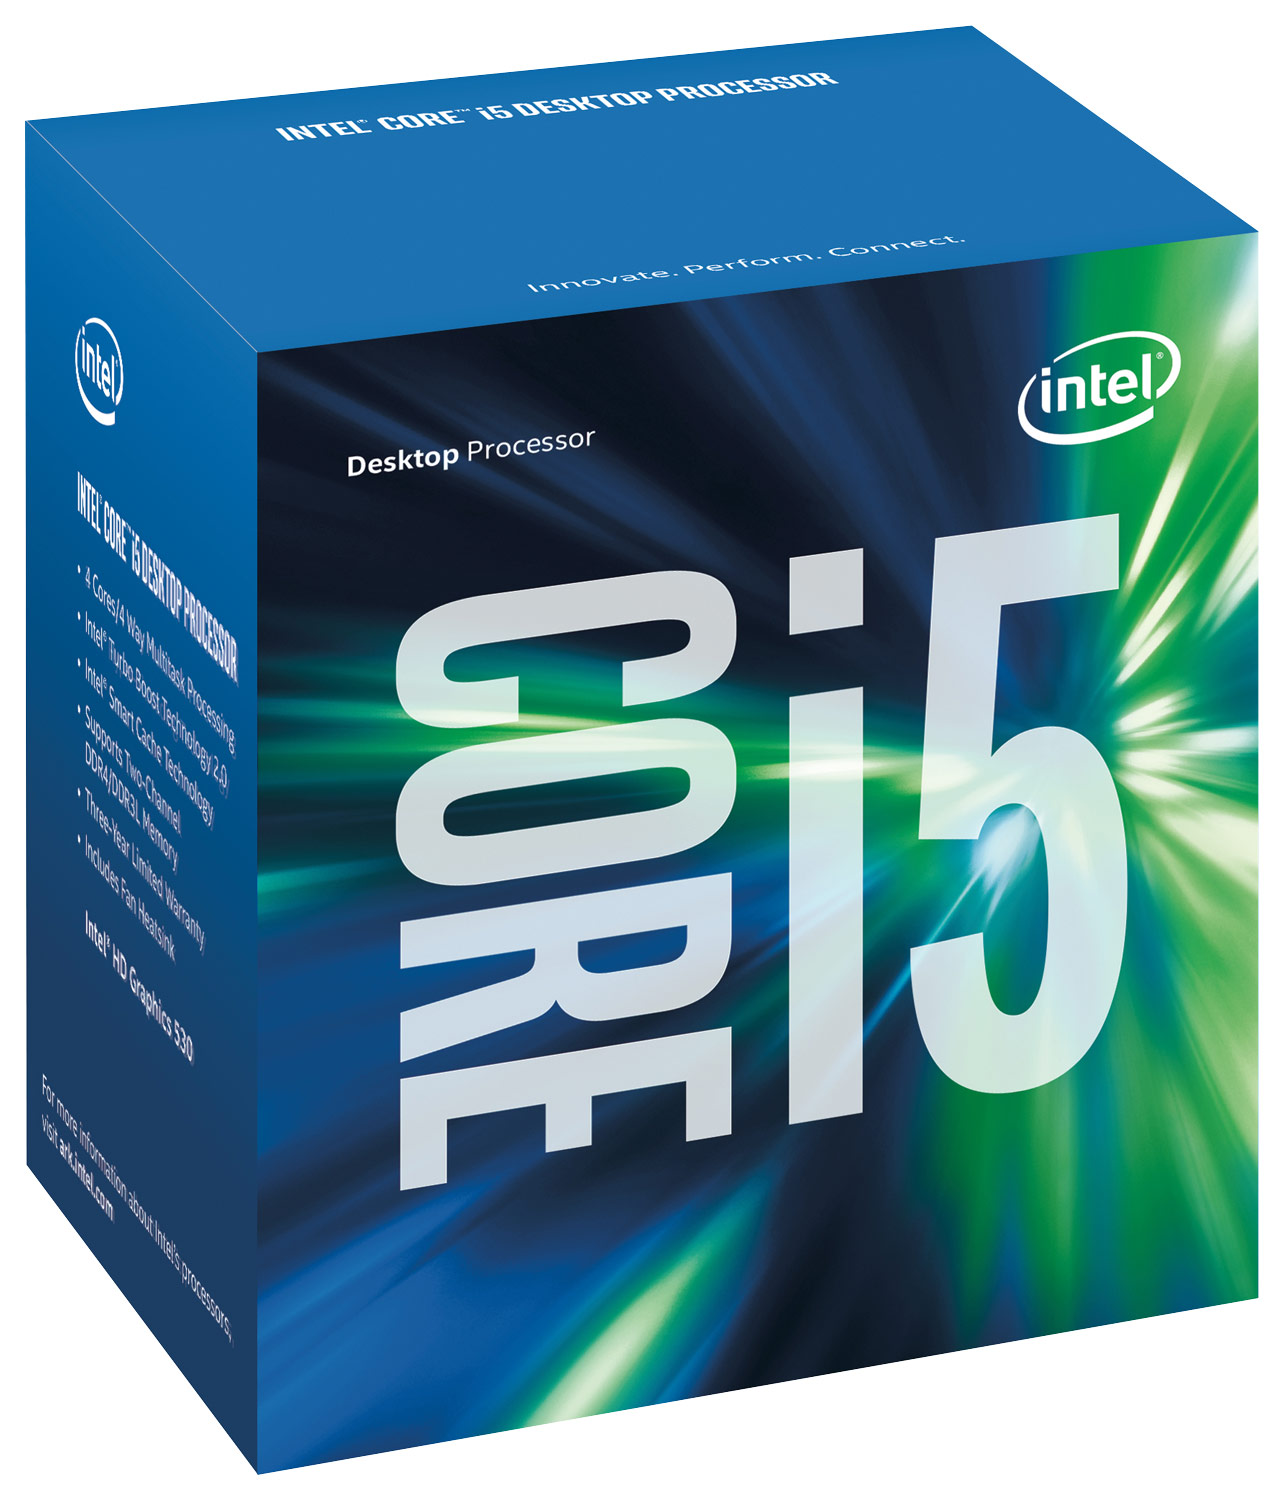 Creed Invitere en million Intel Core™ i5-6500 3.2GHz Socket LGA 1151 Processor Silver/ blue  BX80662I56500 - Best Buy